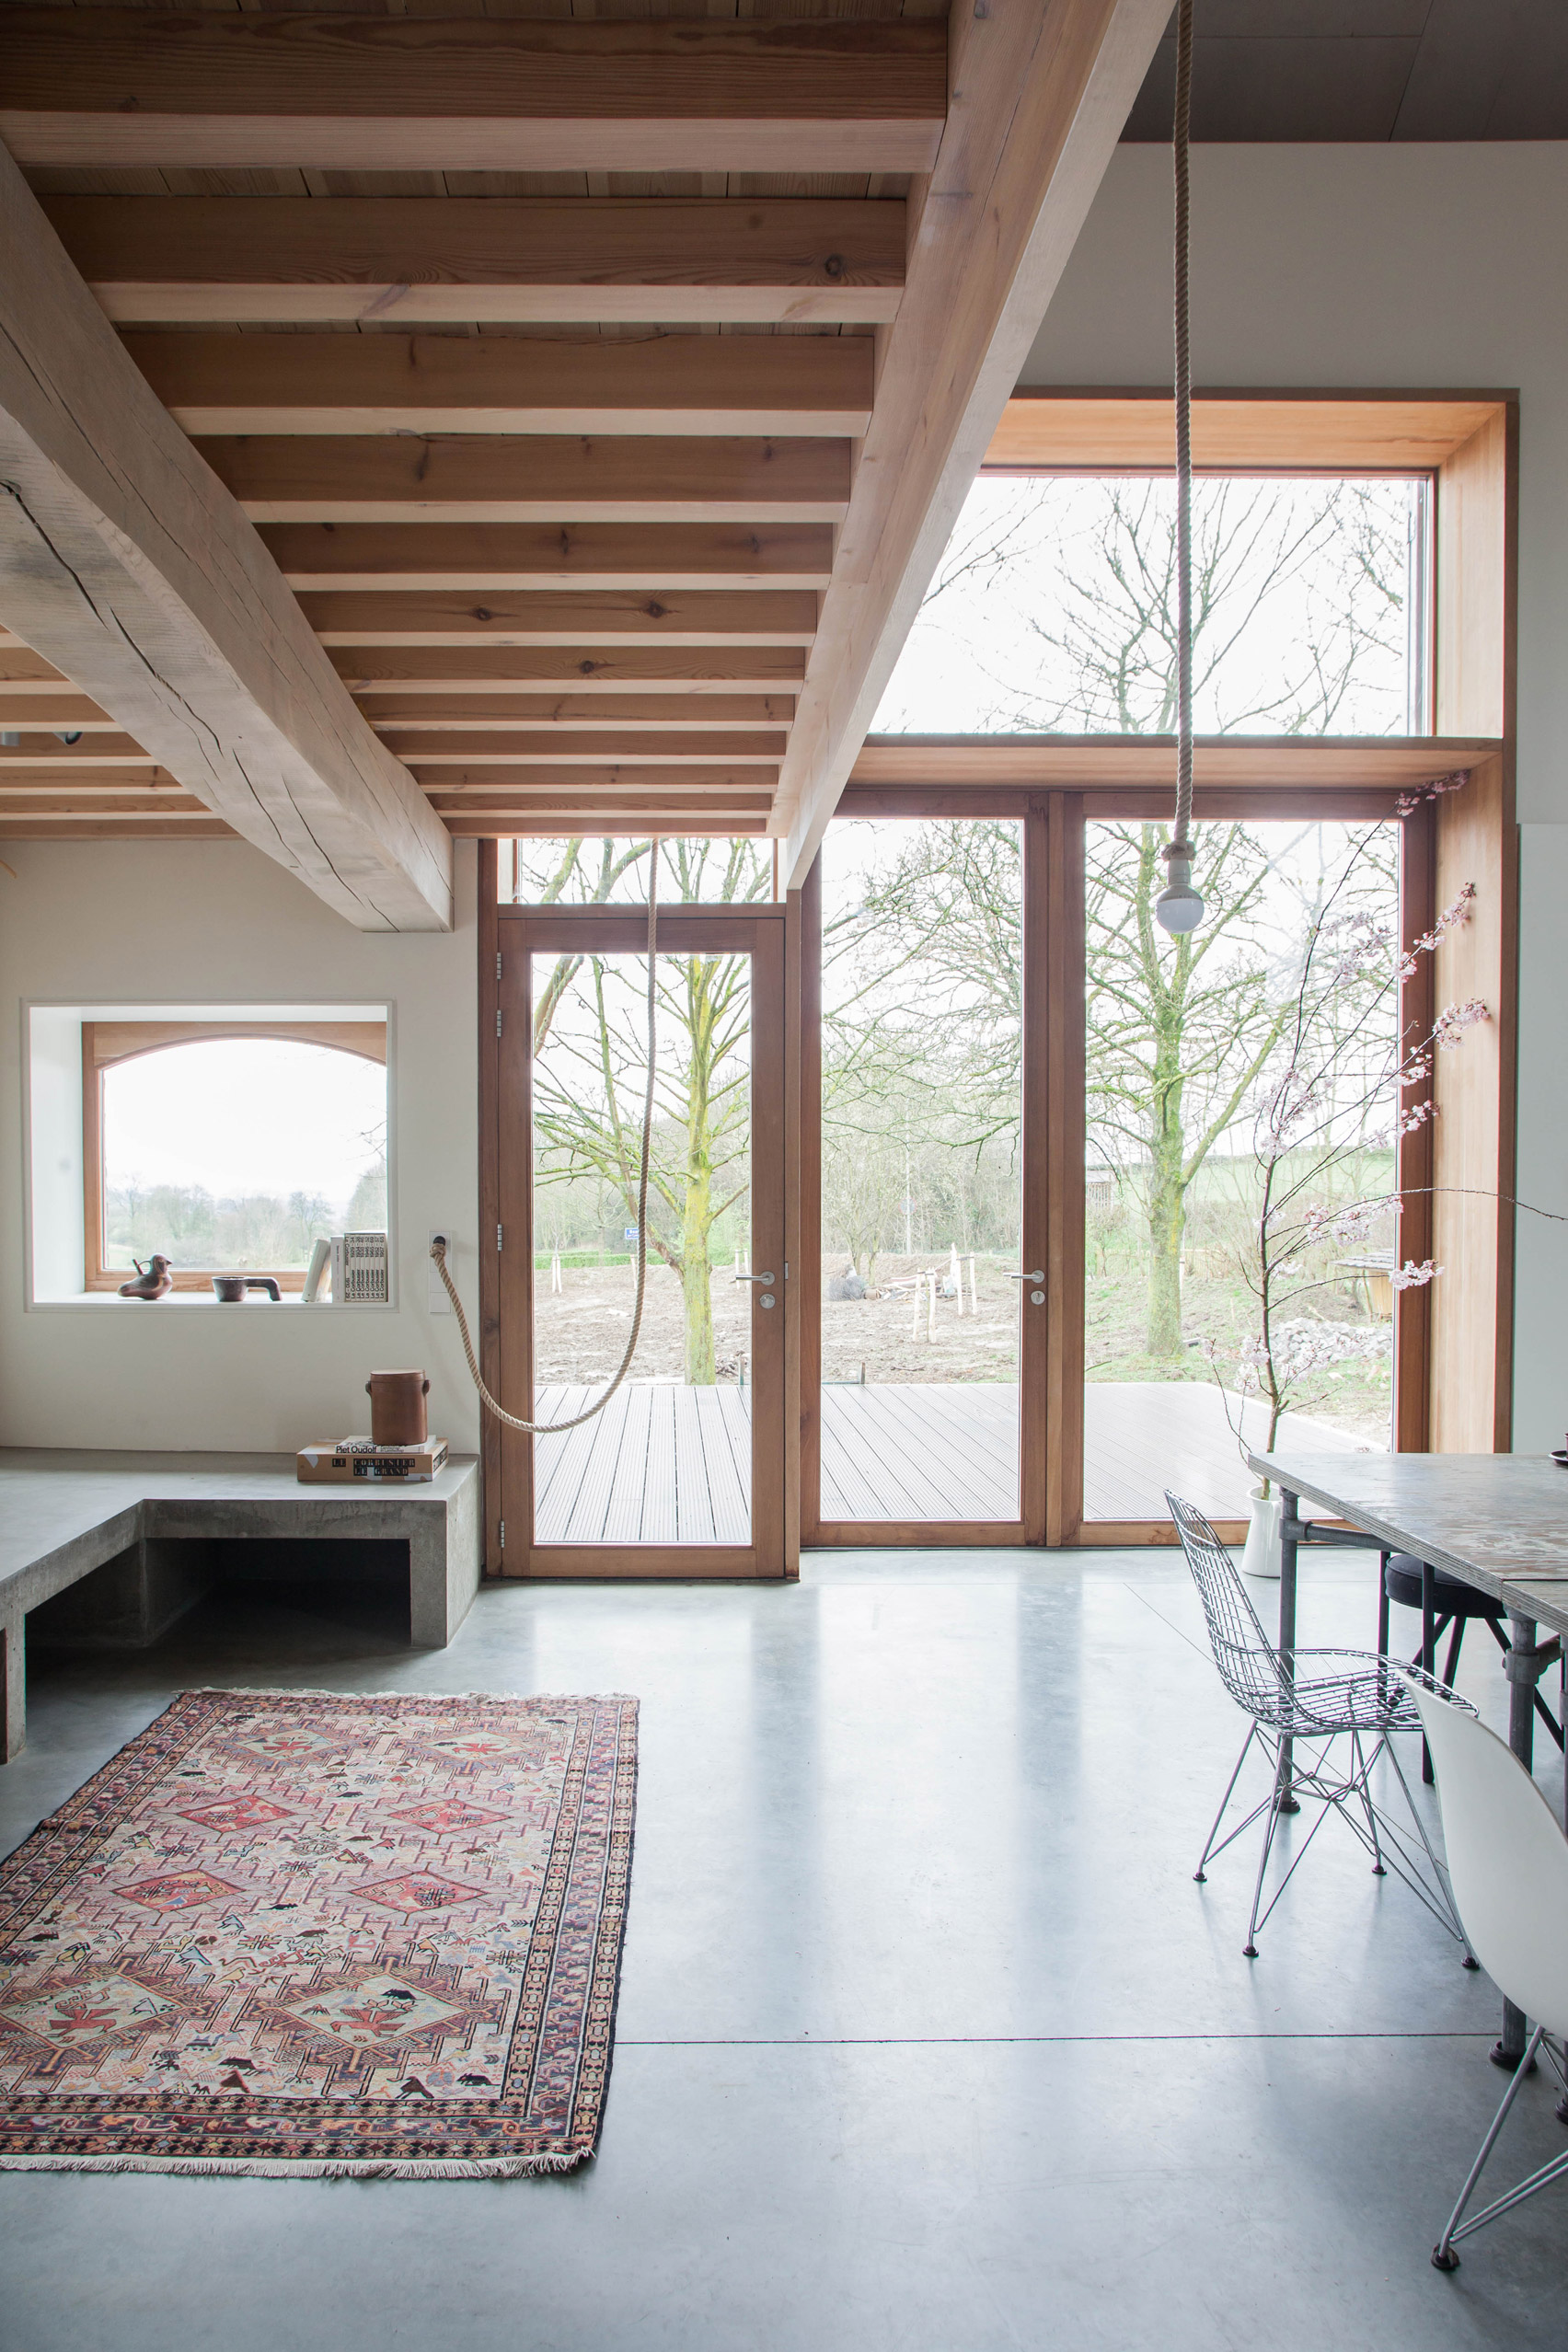 Dutch farmhouse conversion by Jeanne Dekkers Architects in Limburg